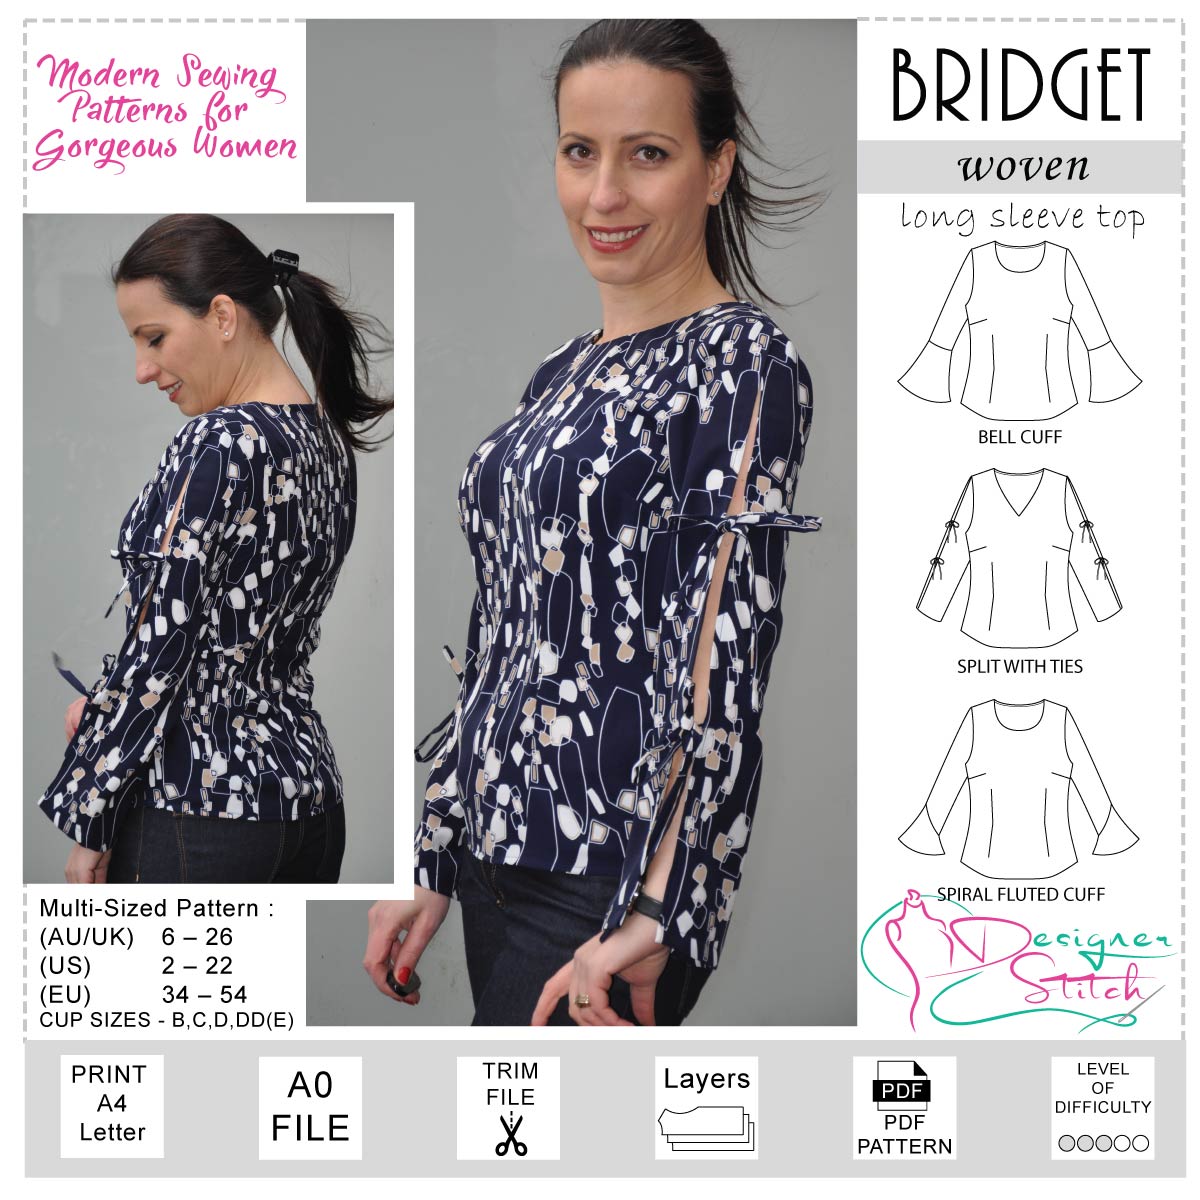 bomuld Flourish Sicilien Bridget Long Sleeve Top Sewing Pattern (PDF) - Designer Stitch